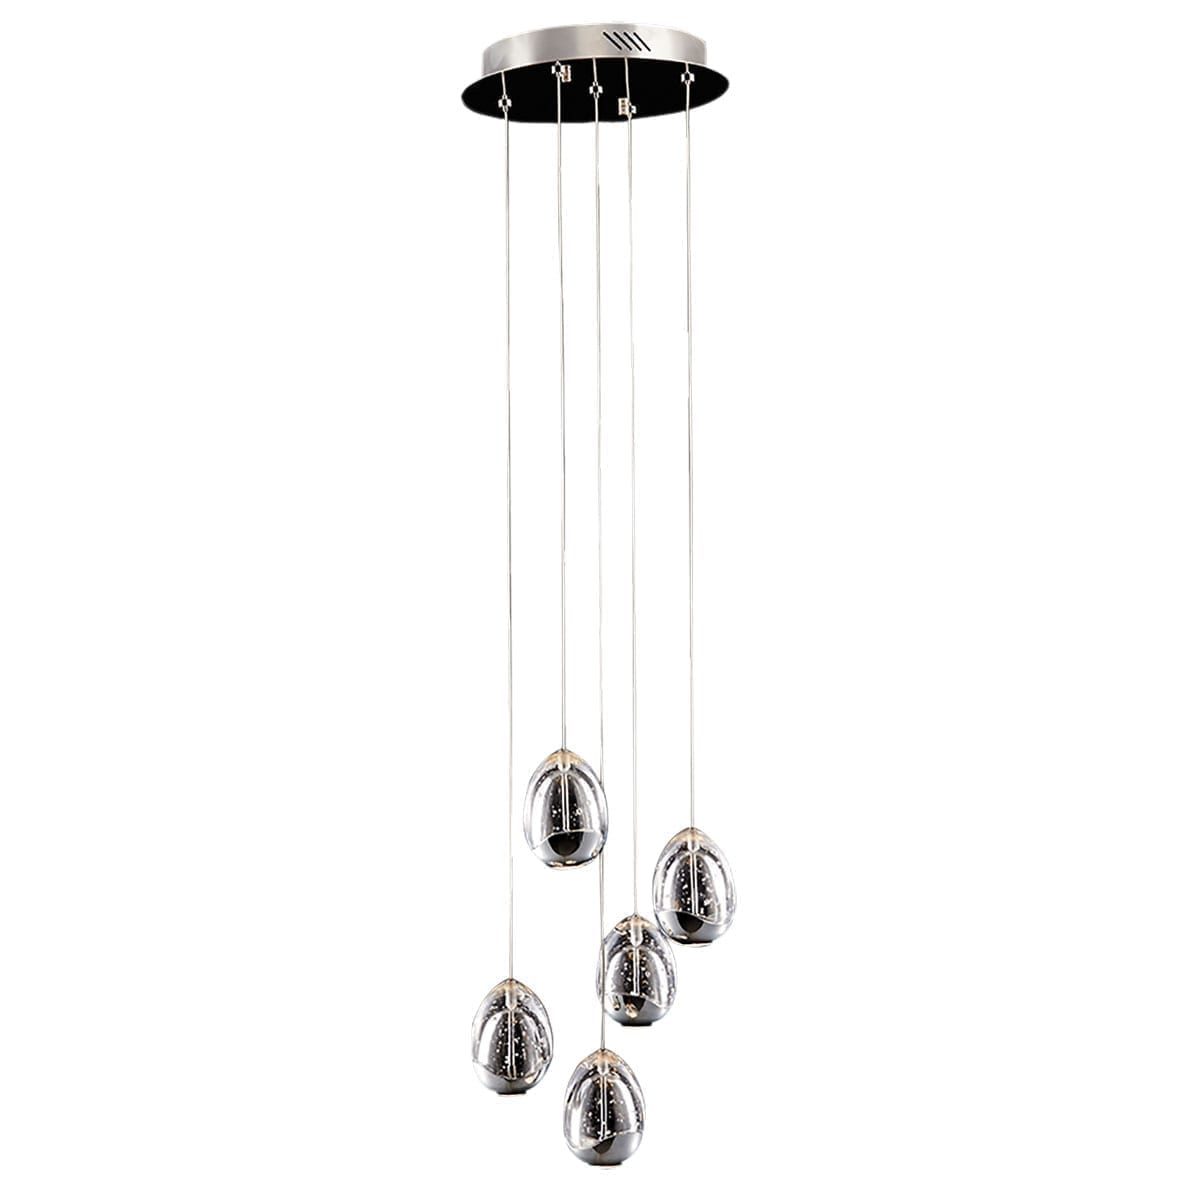 Hanging LED lamp Huelto 5 CH